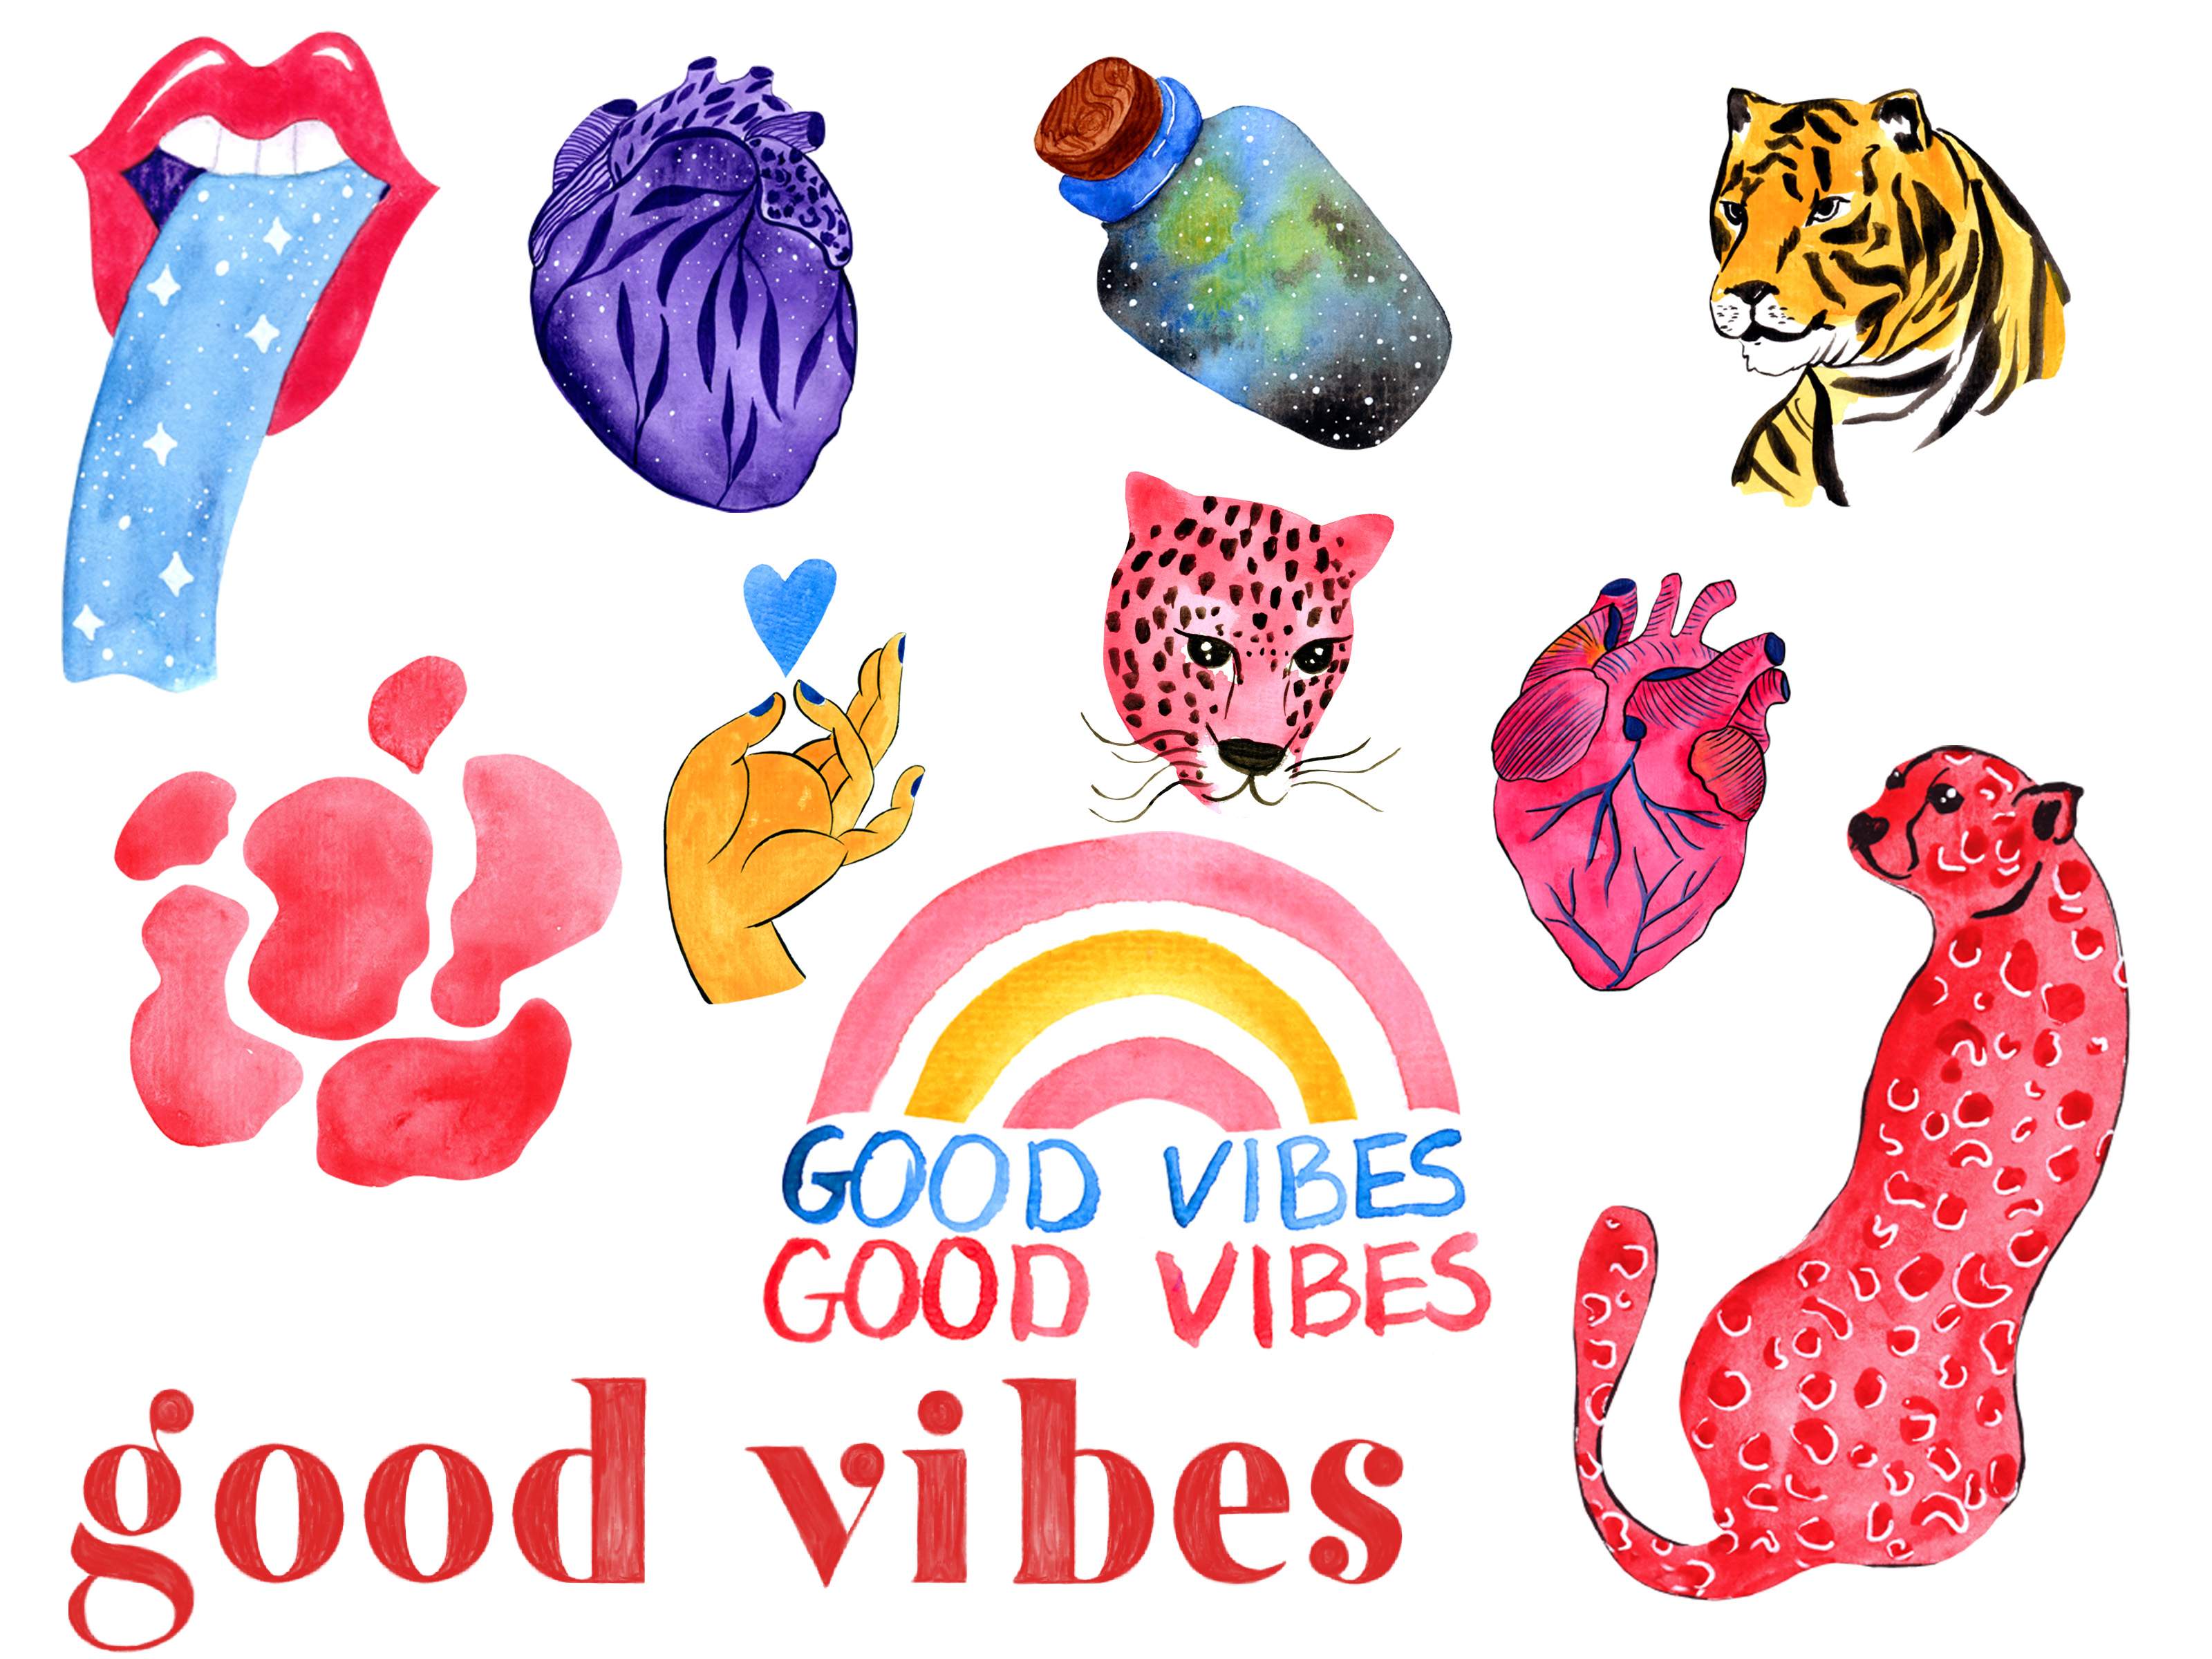 Good vibes good vibes and good vibes.